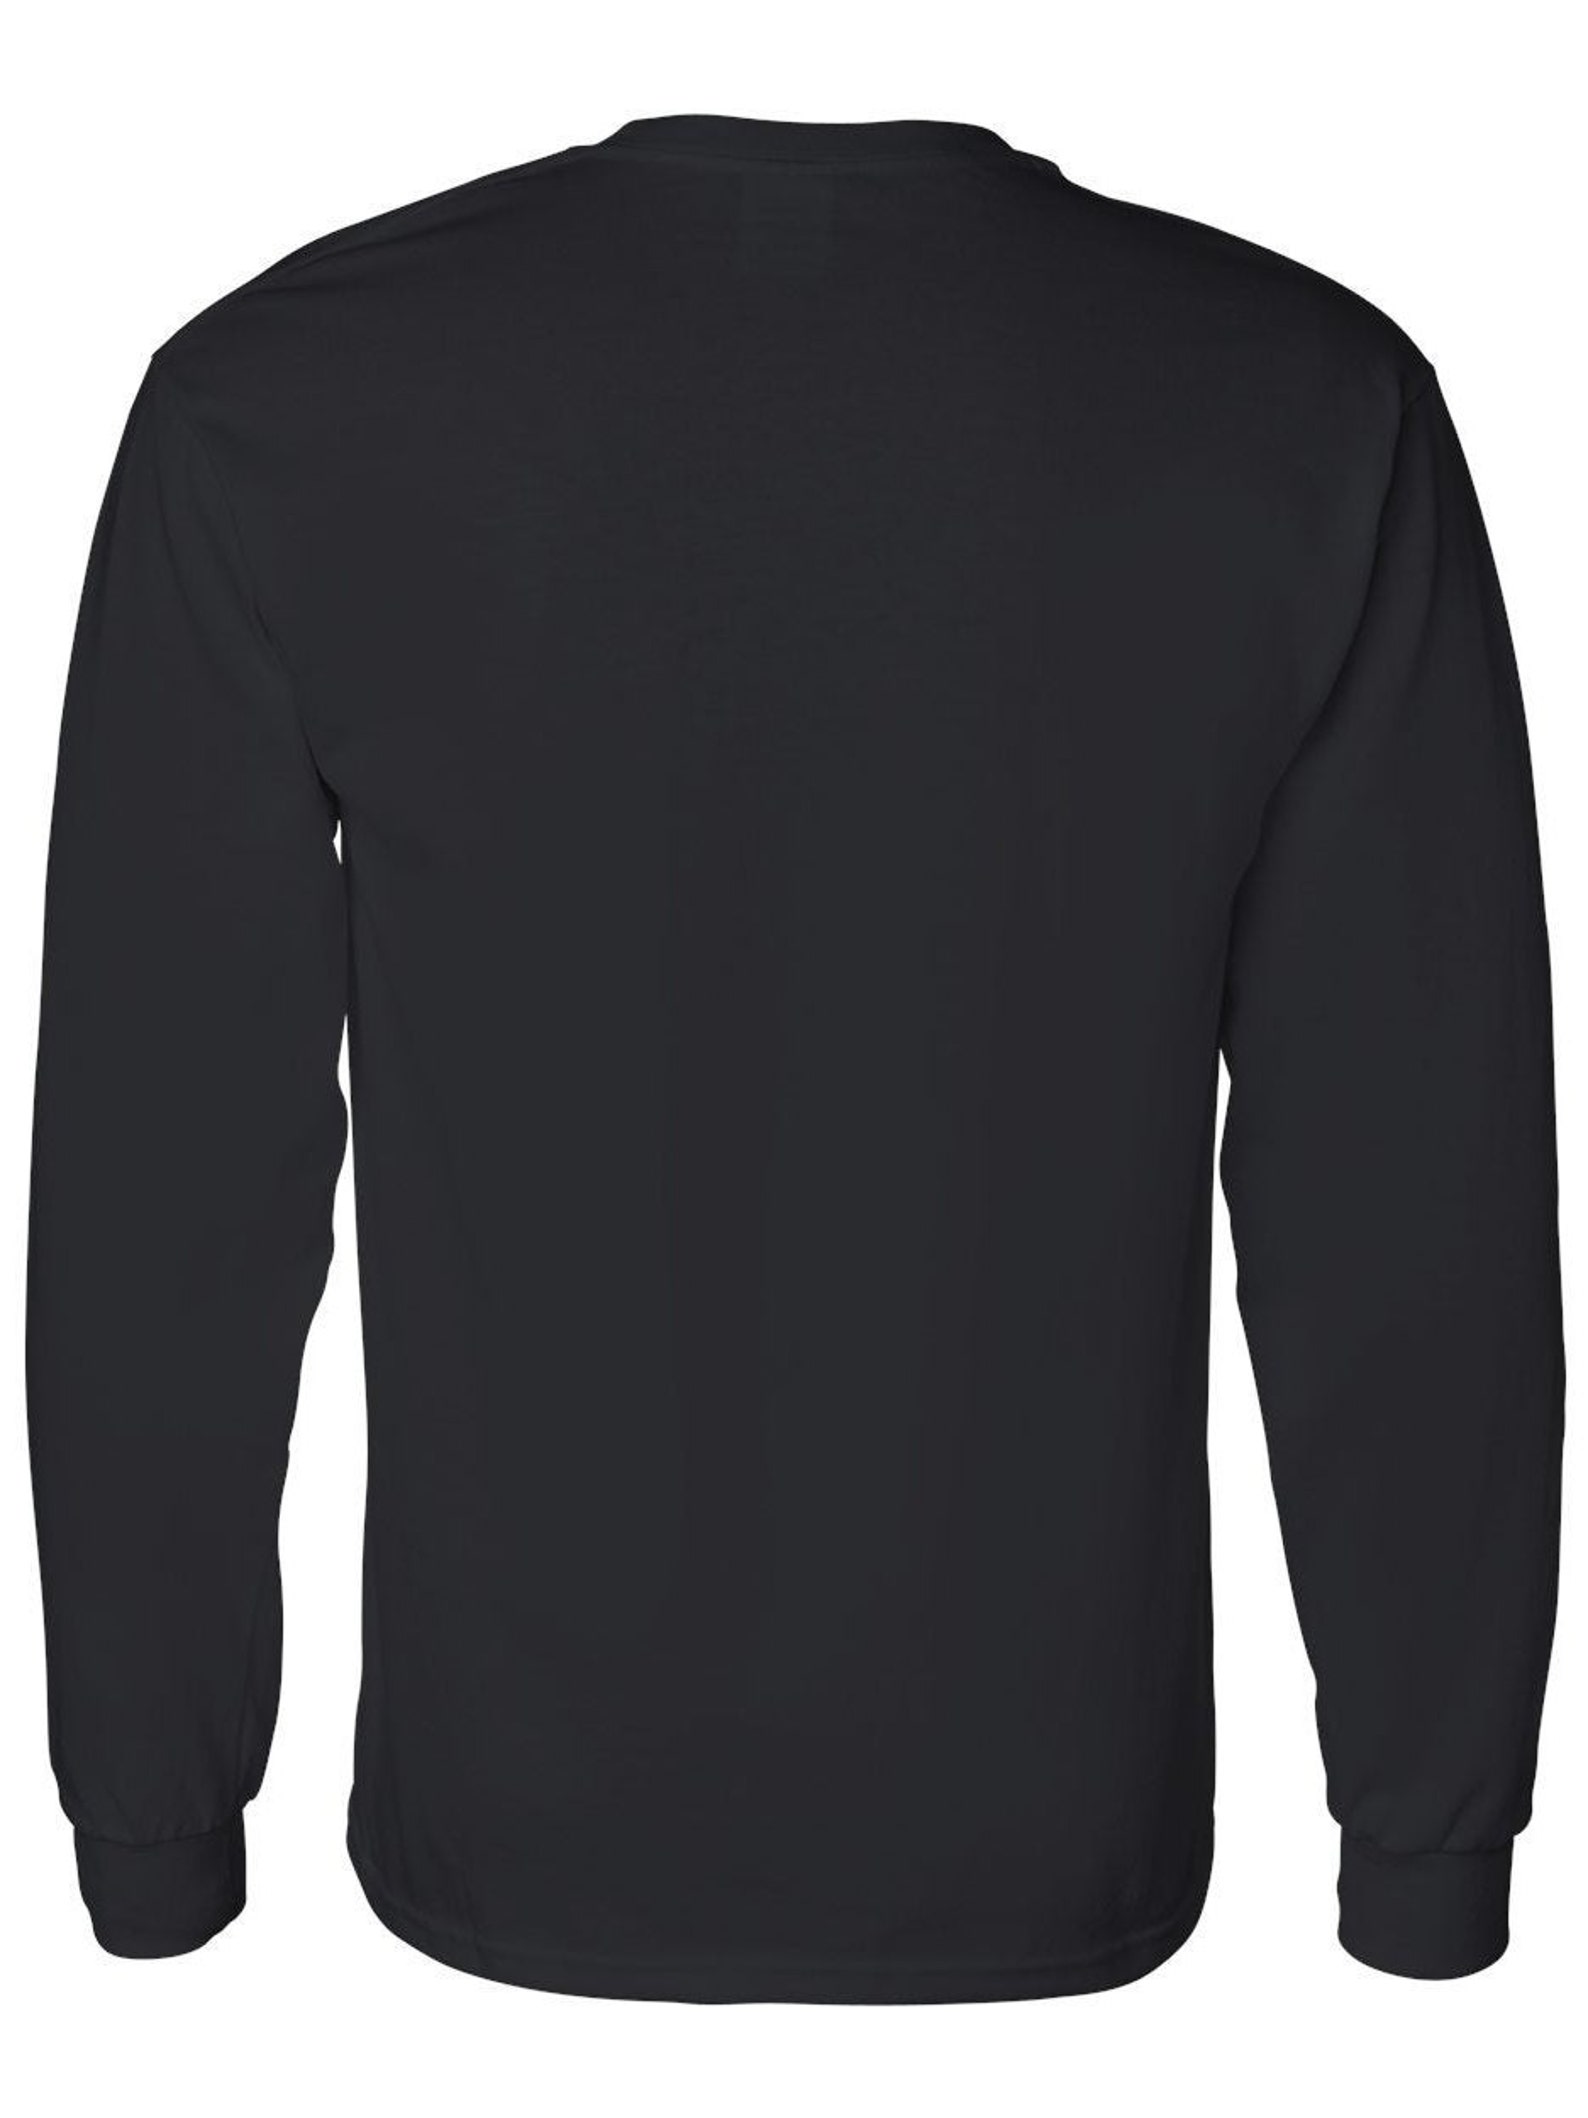 Plain Black Shirt Long Sleeve Solid Tees Gildan Shirt | Etsy